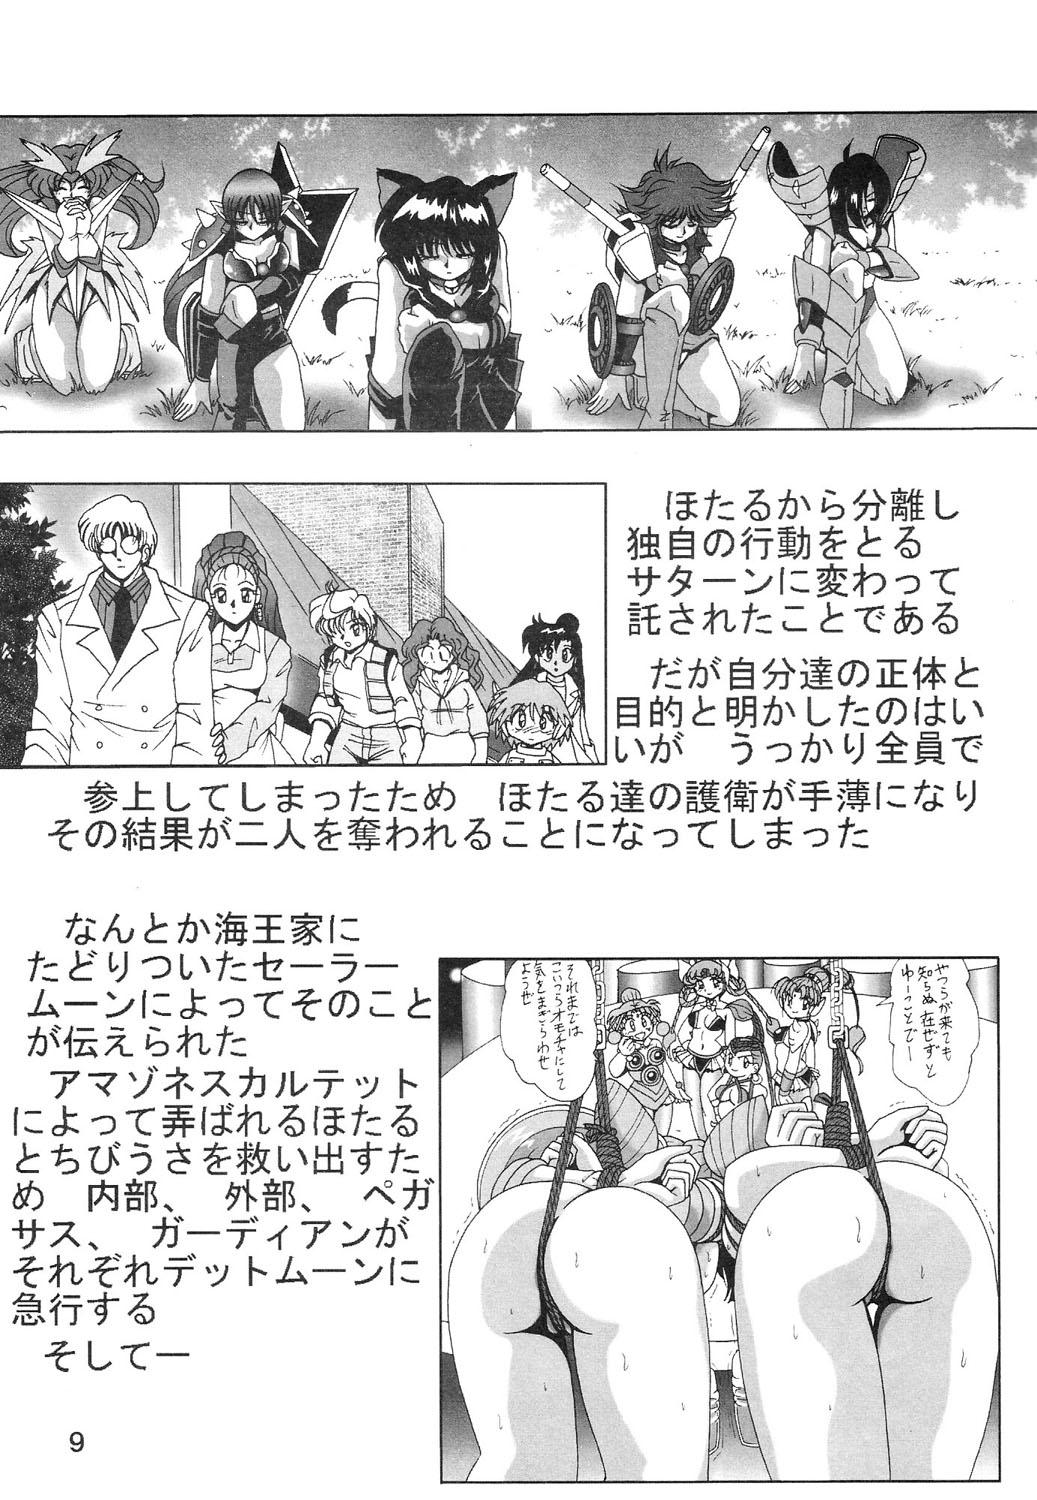 Nuru Silent Saturn SS vol. 8 - Sailor moon Reverse - Page 8